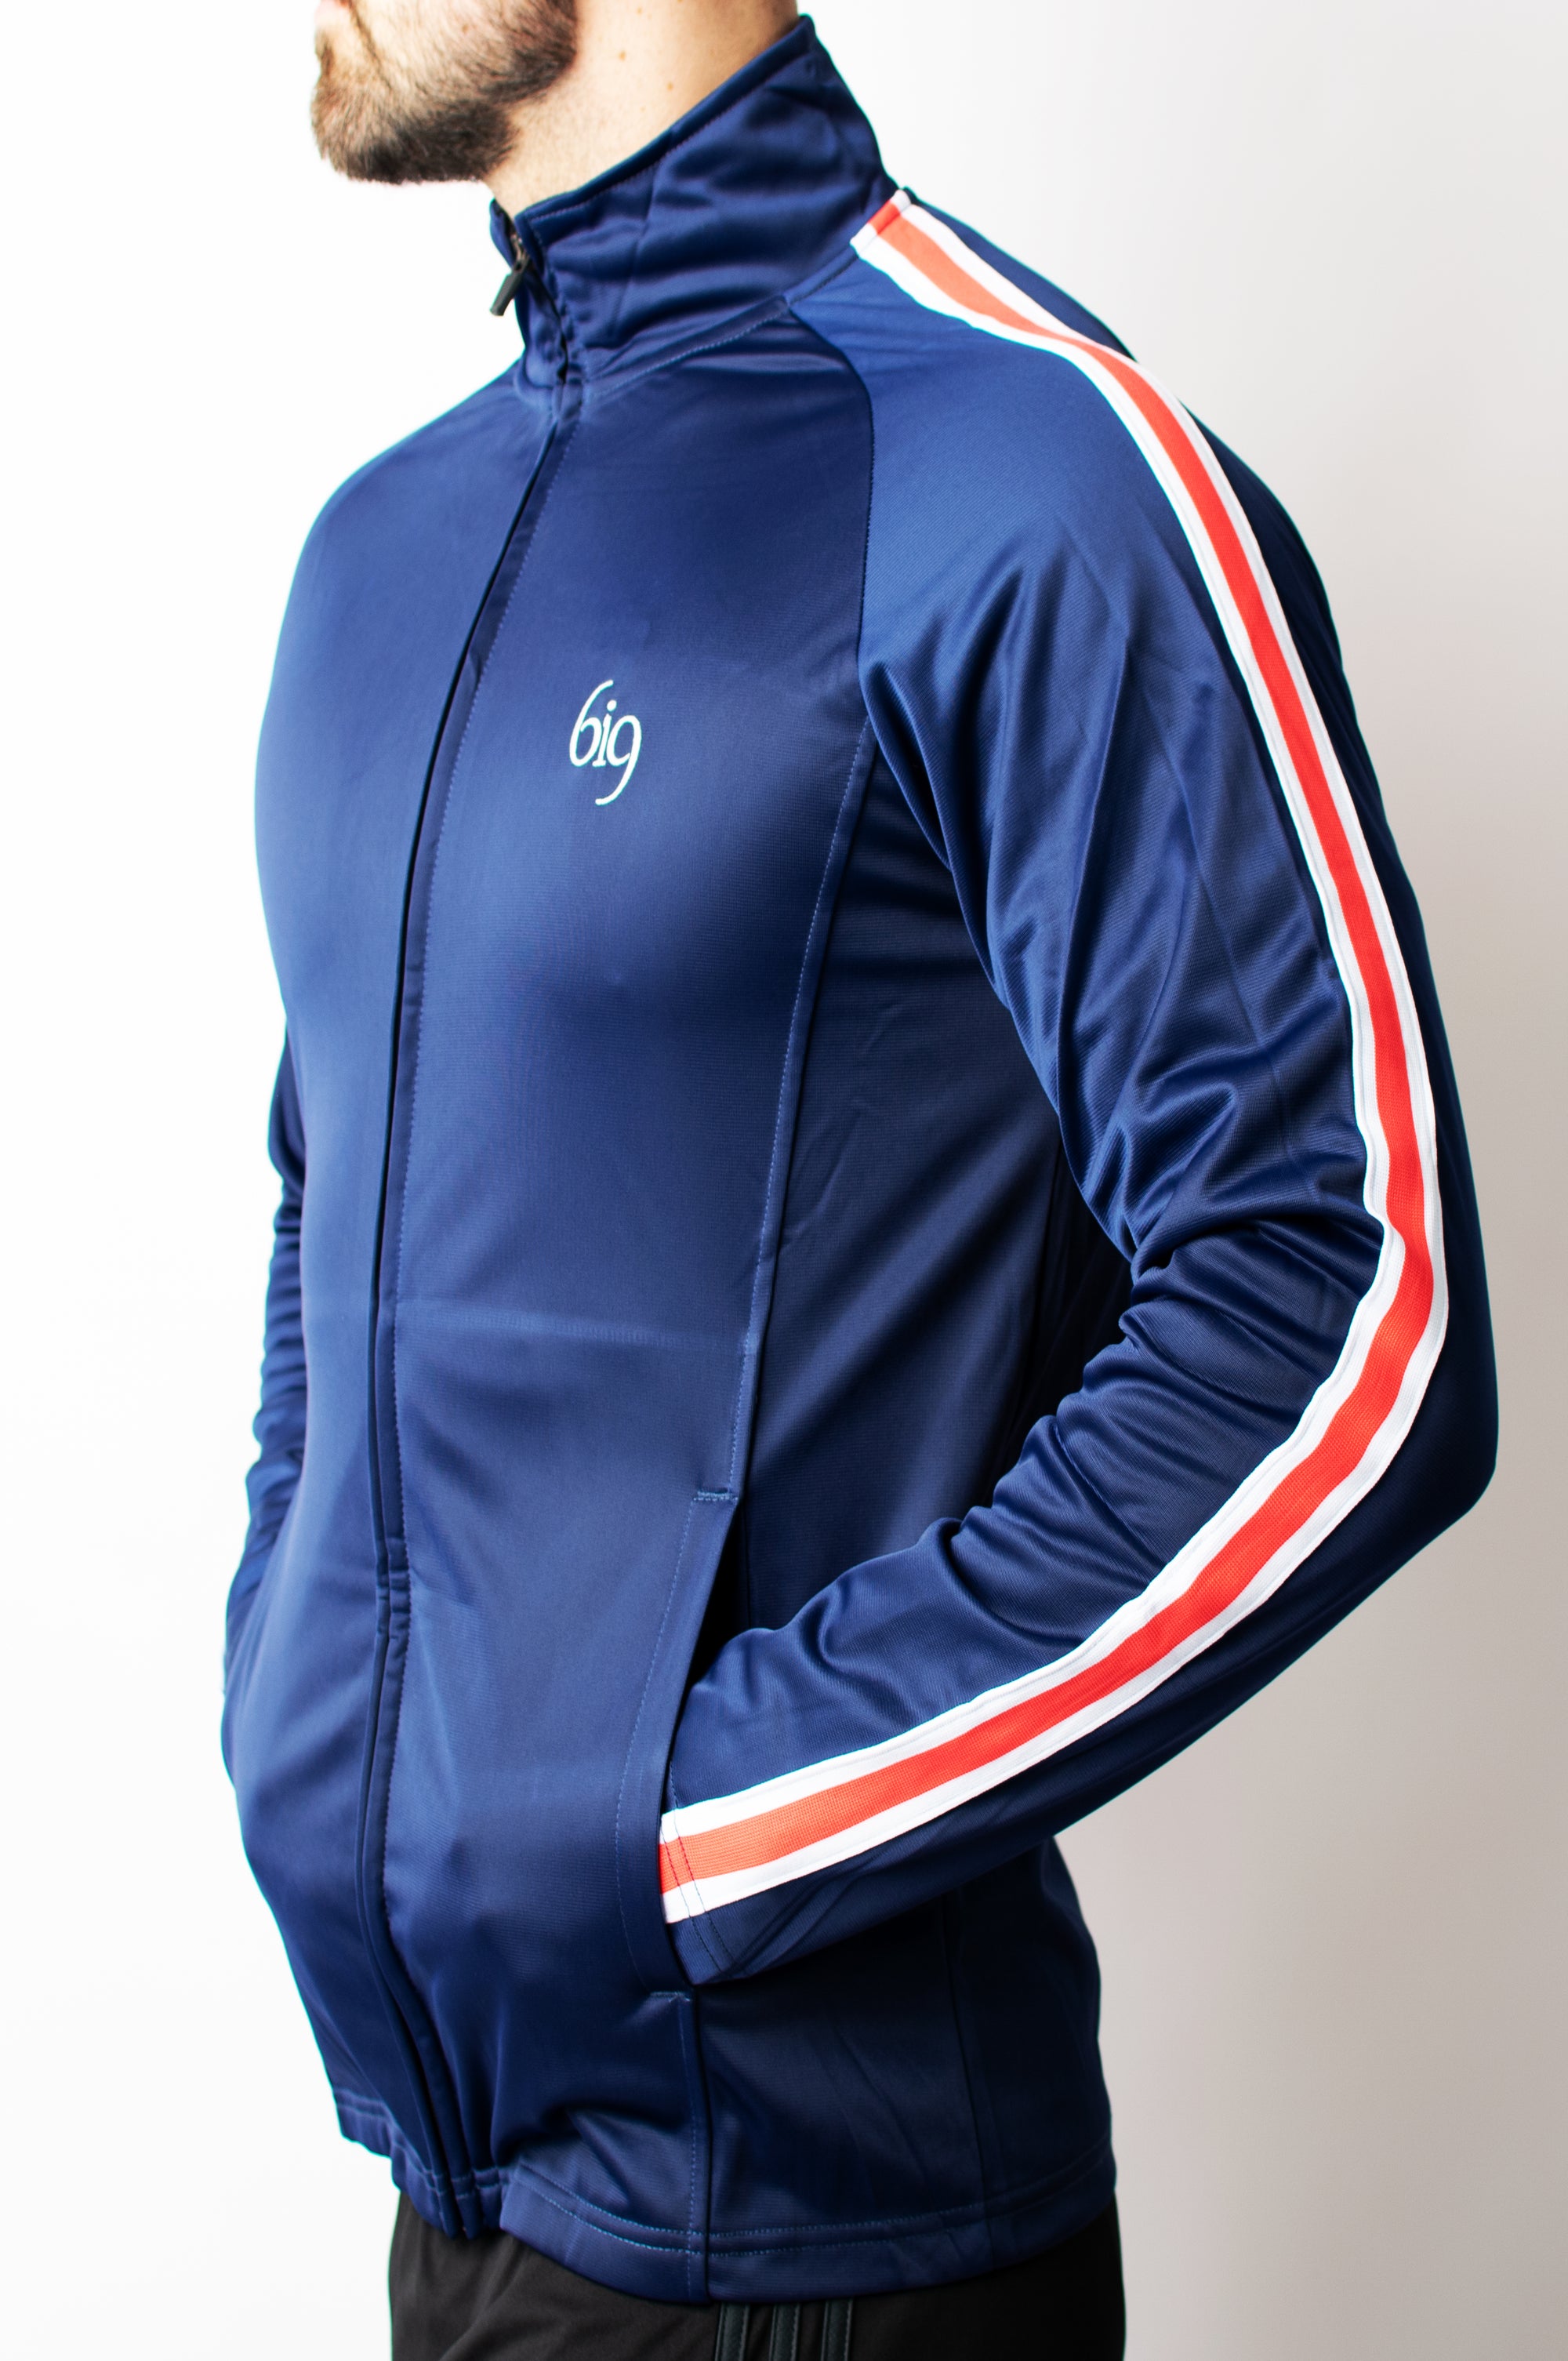 Resistance Track Jacket - Blue/Red - BIG Gymwear Ltd